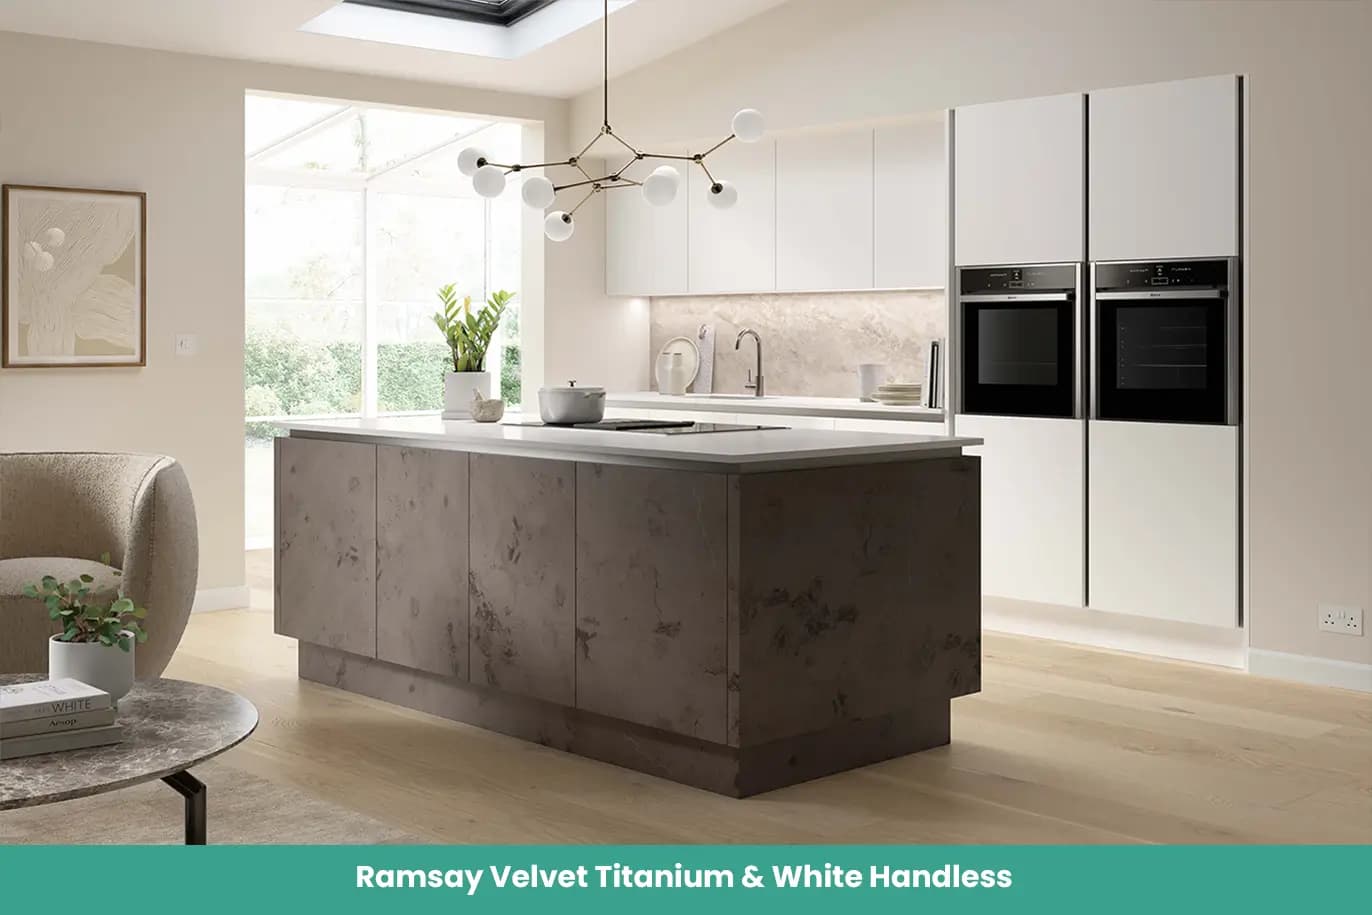 Ramsay Velvet Titanium White Handless Kitchen